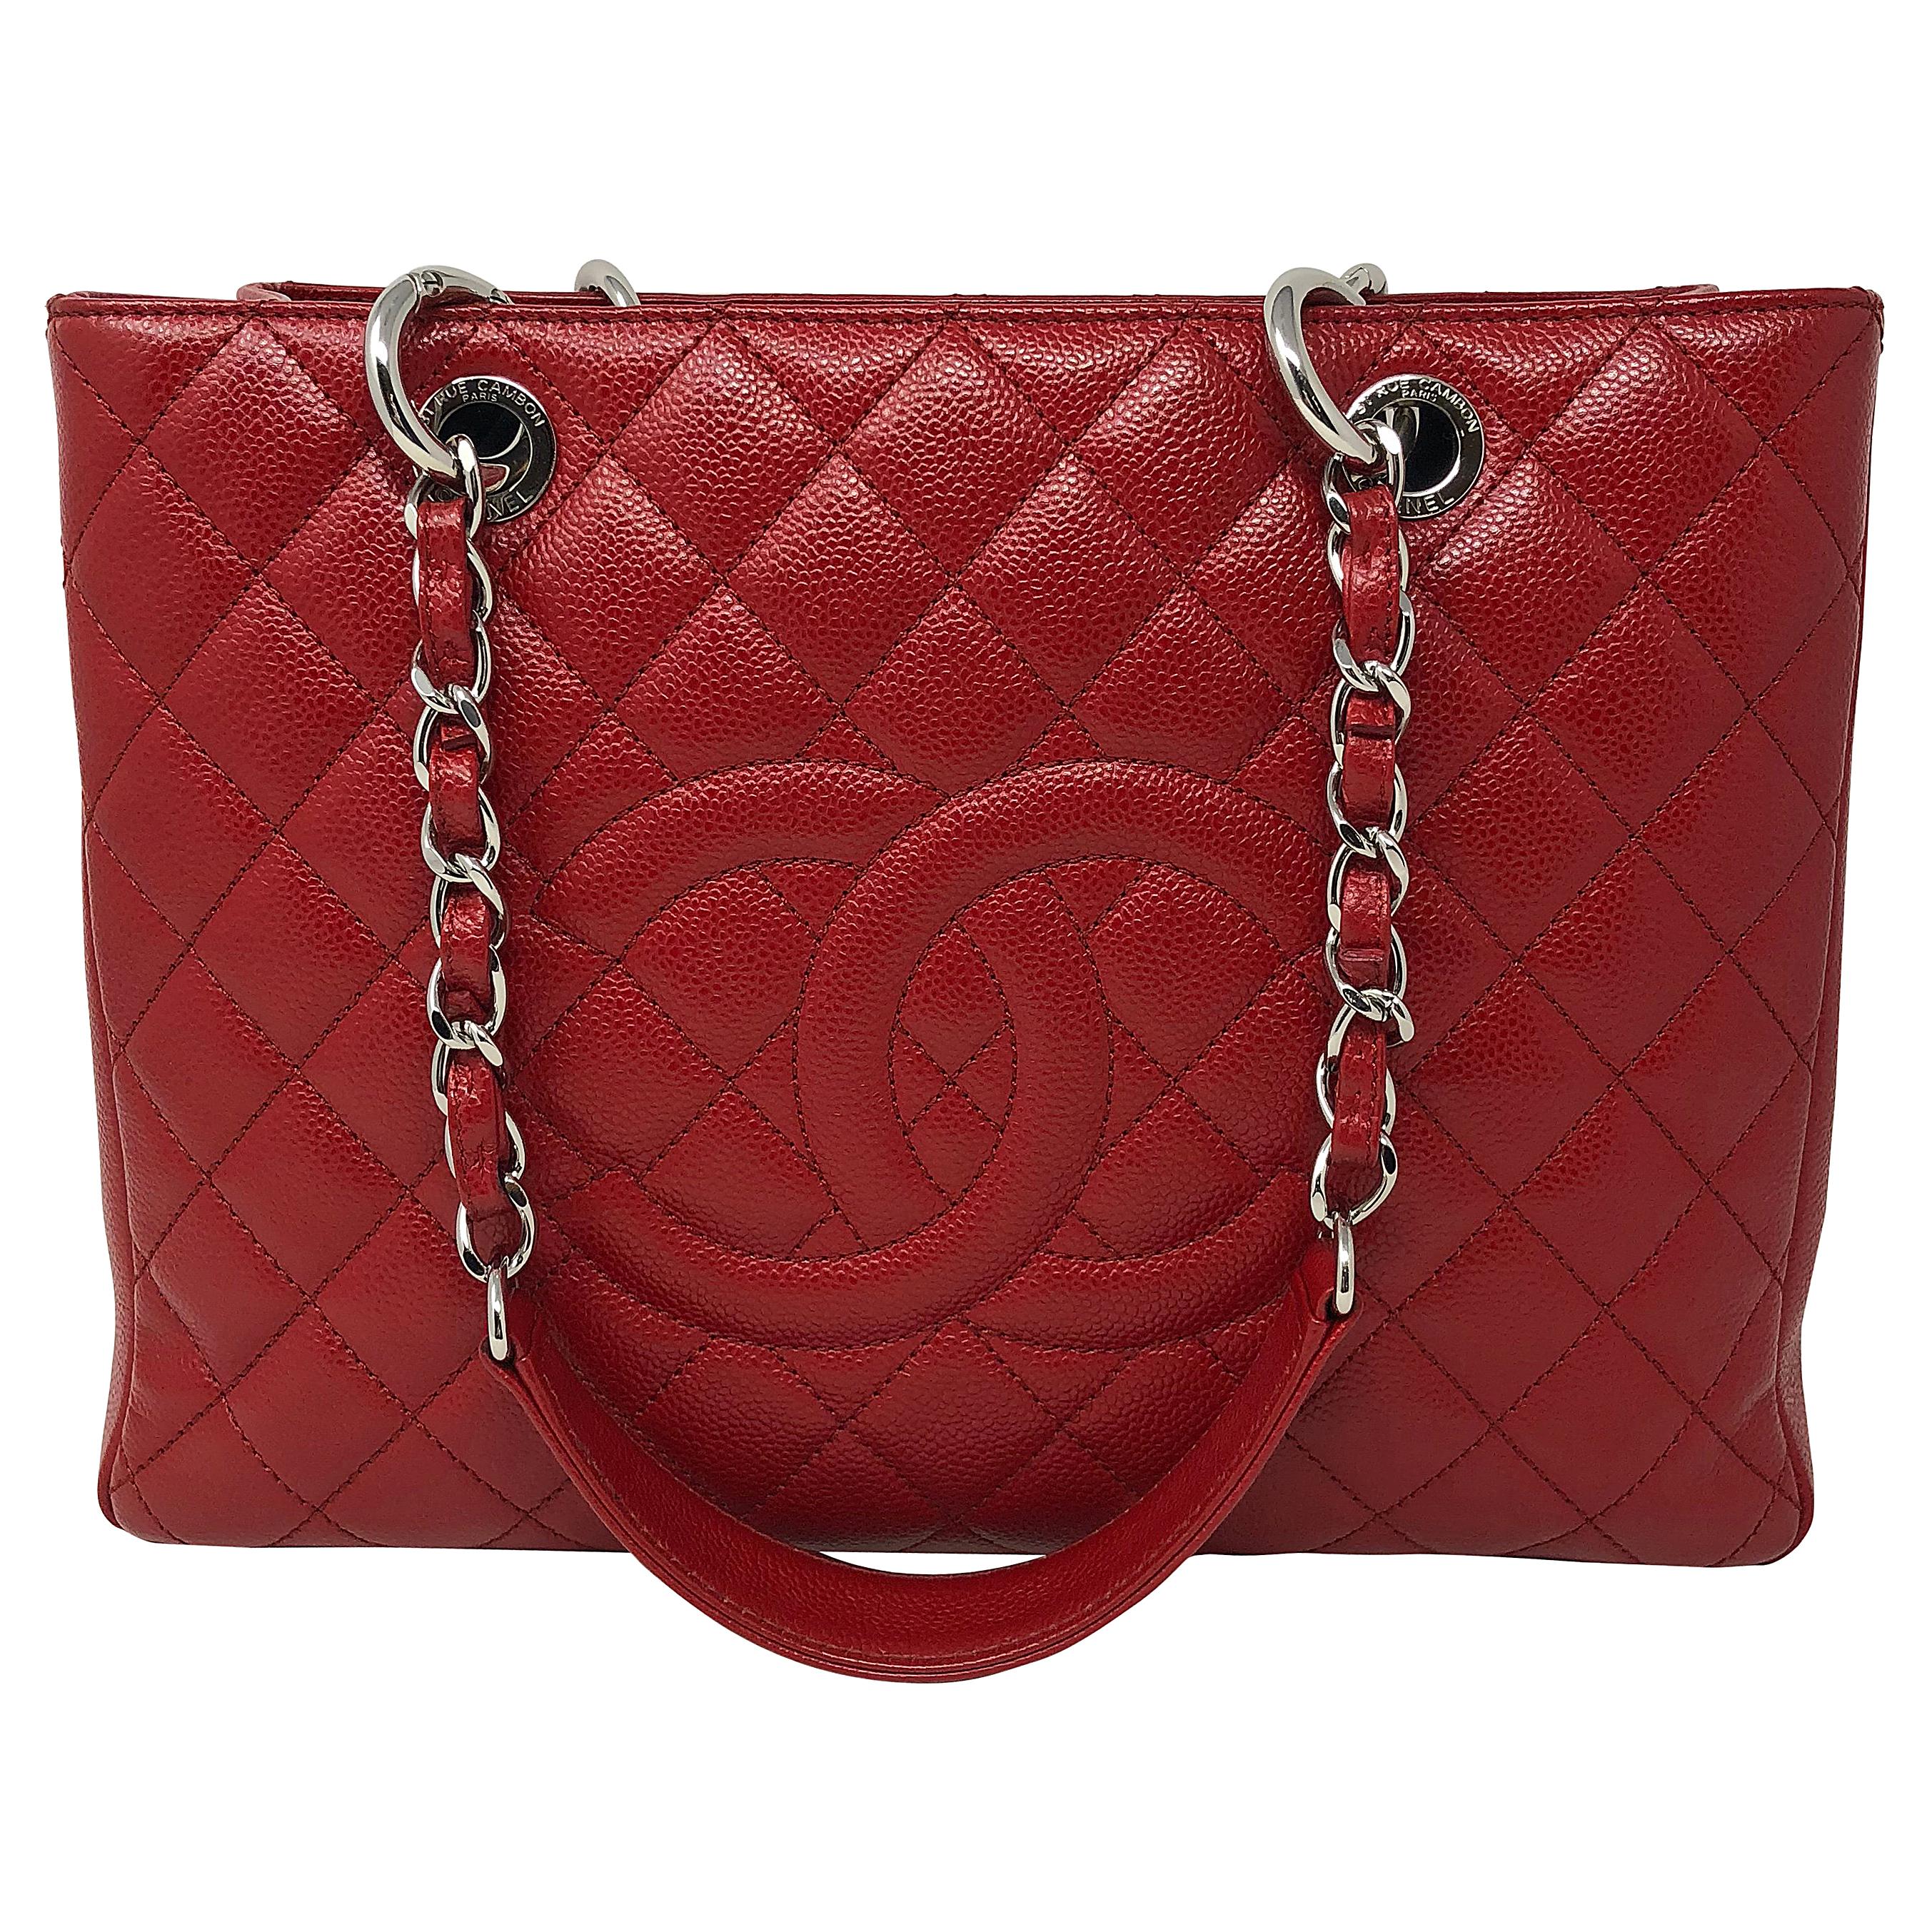 Chanel Red Grand Shopper Tote Bag